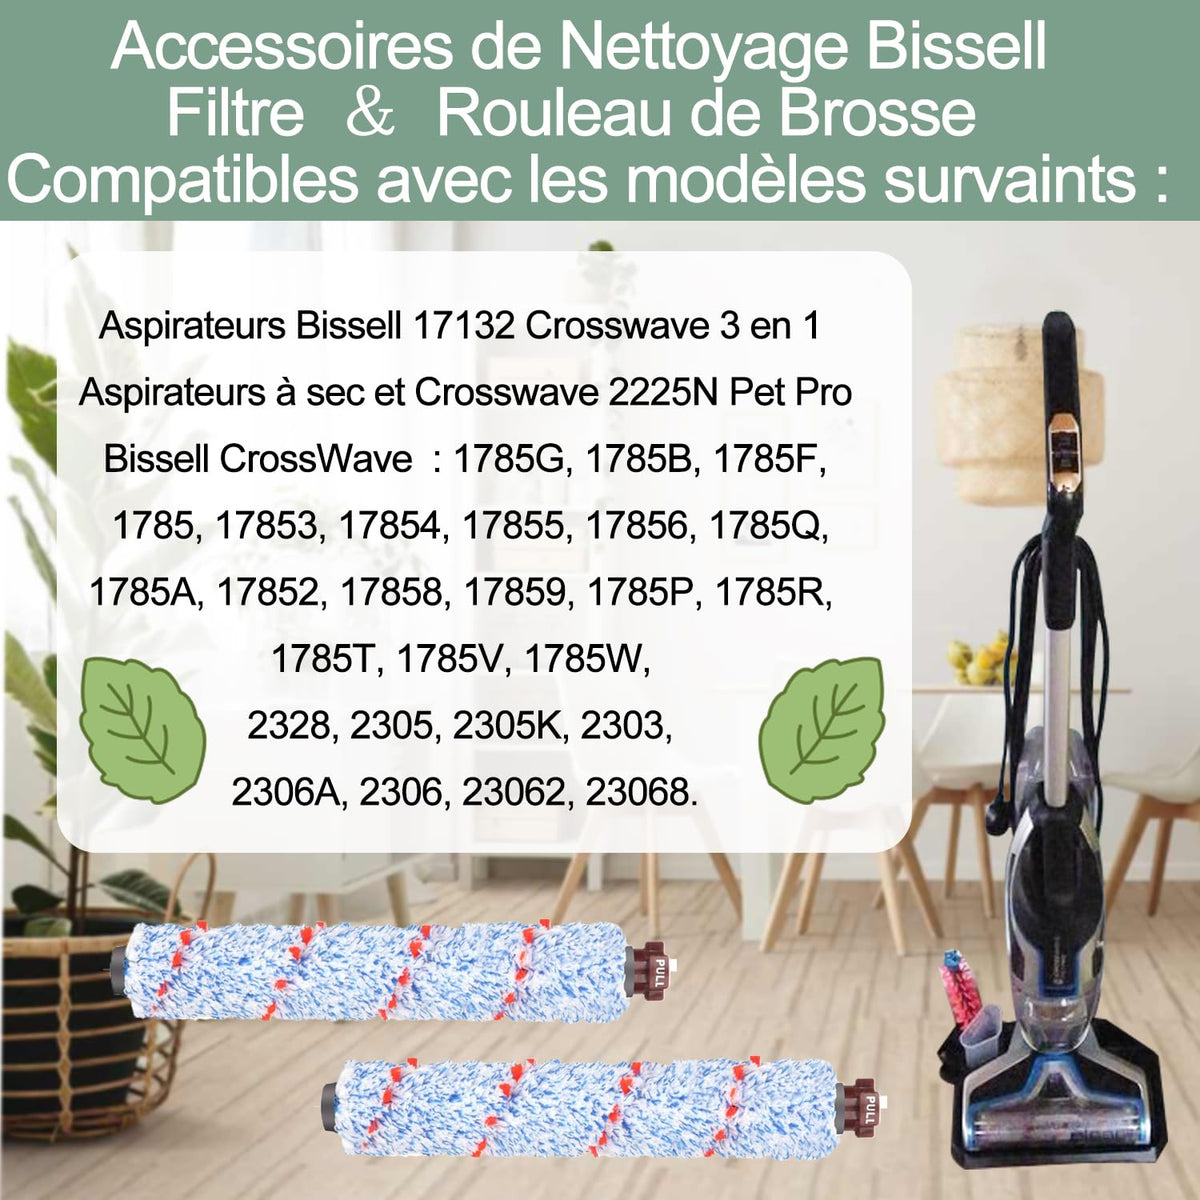 Brosse pour parquet BISSELL Crosswave - Accessoires BISSELL